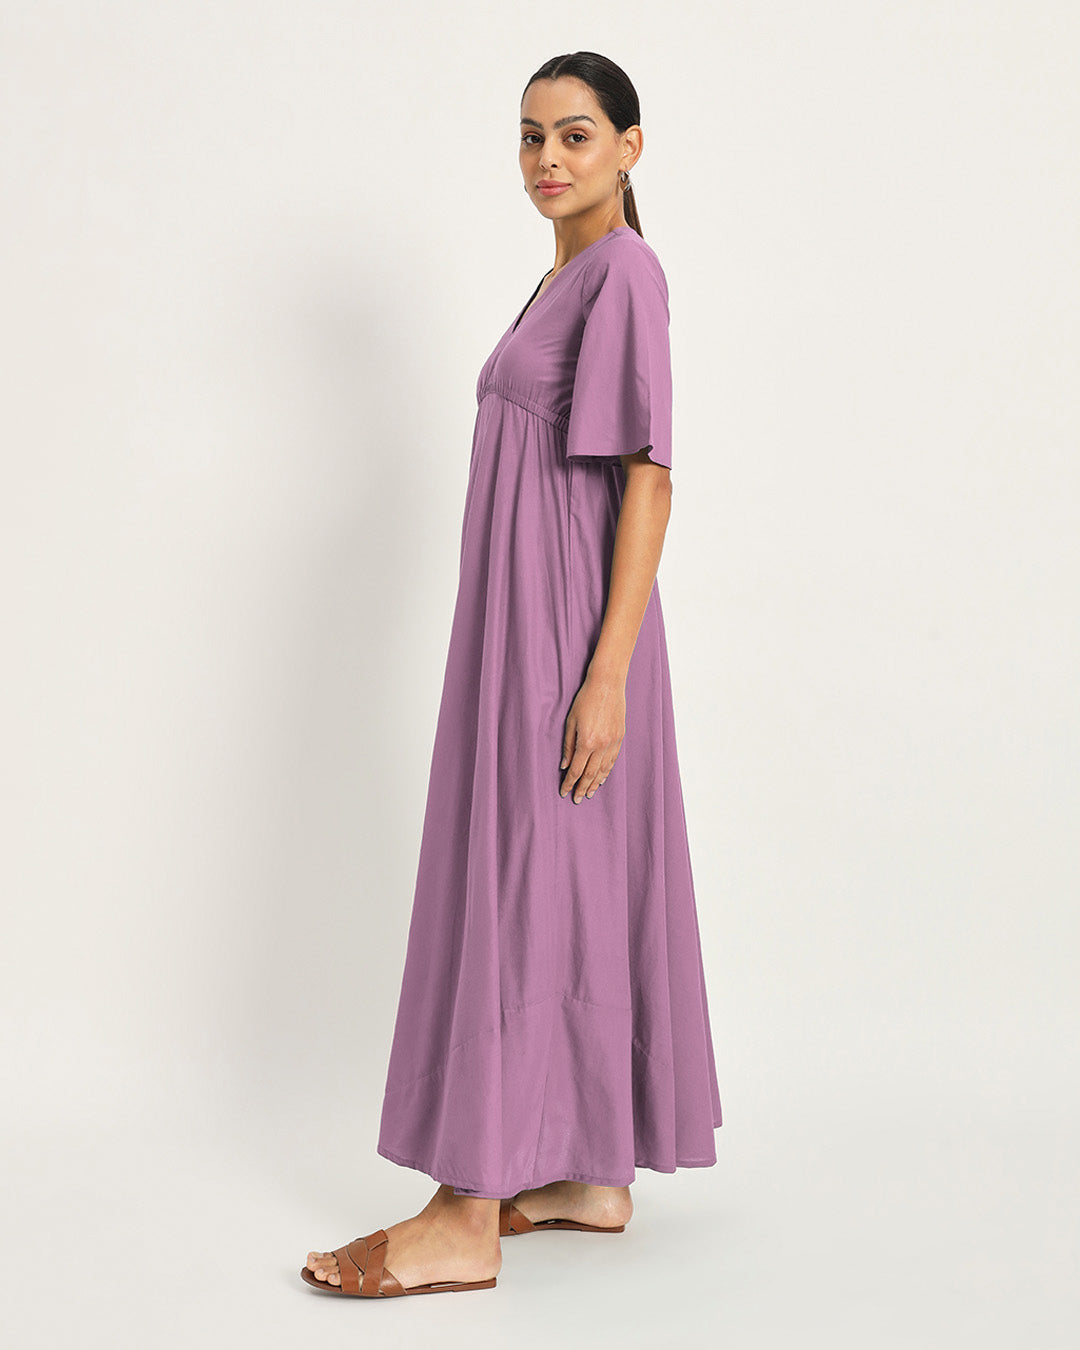 Combo: Classic Black & Iris Pink Calm Comforts Nightdress